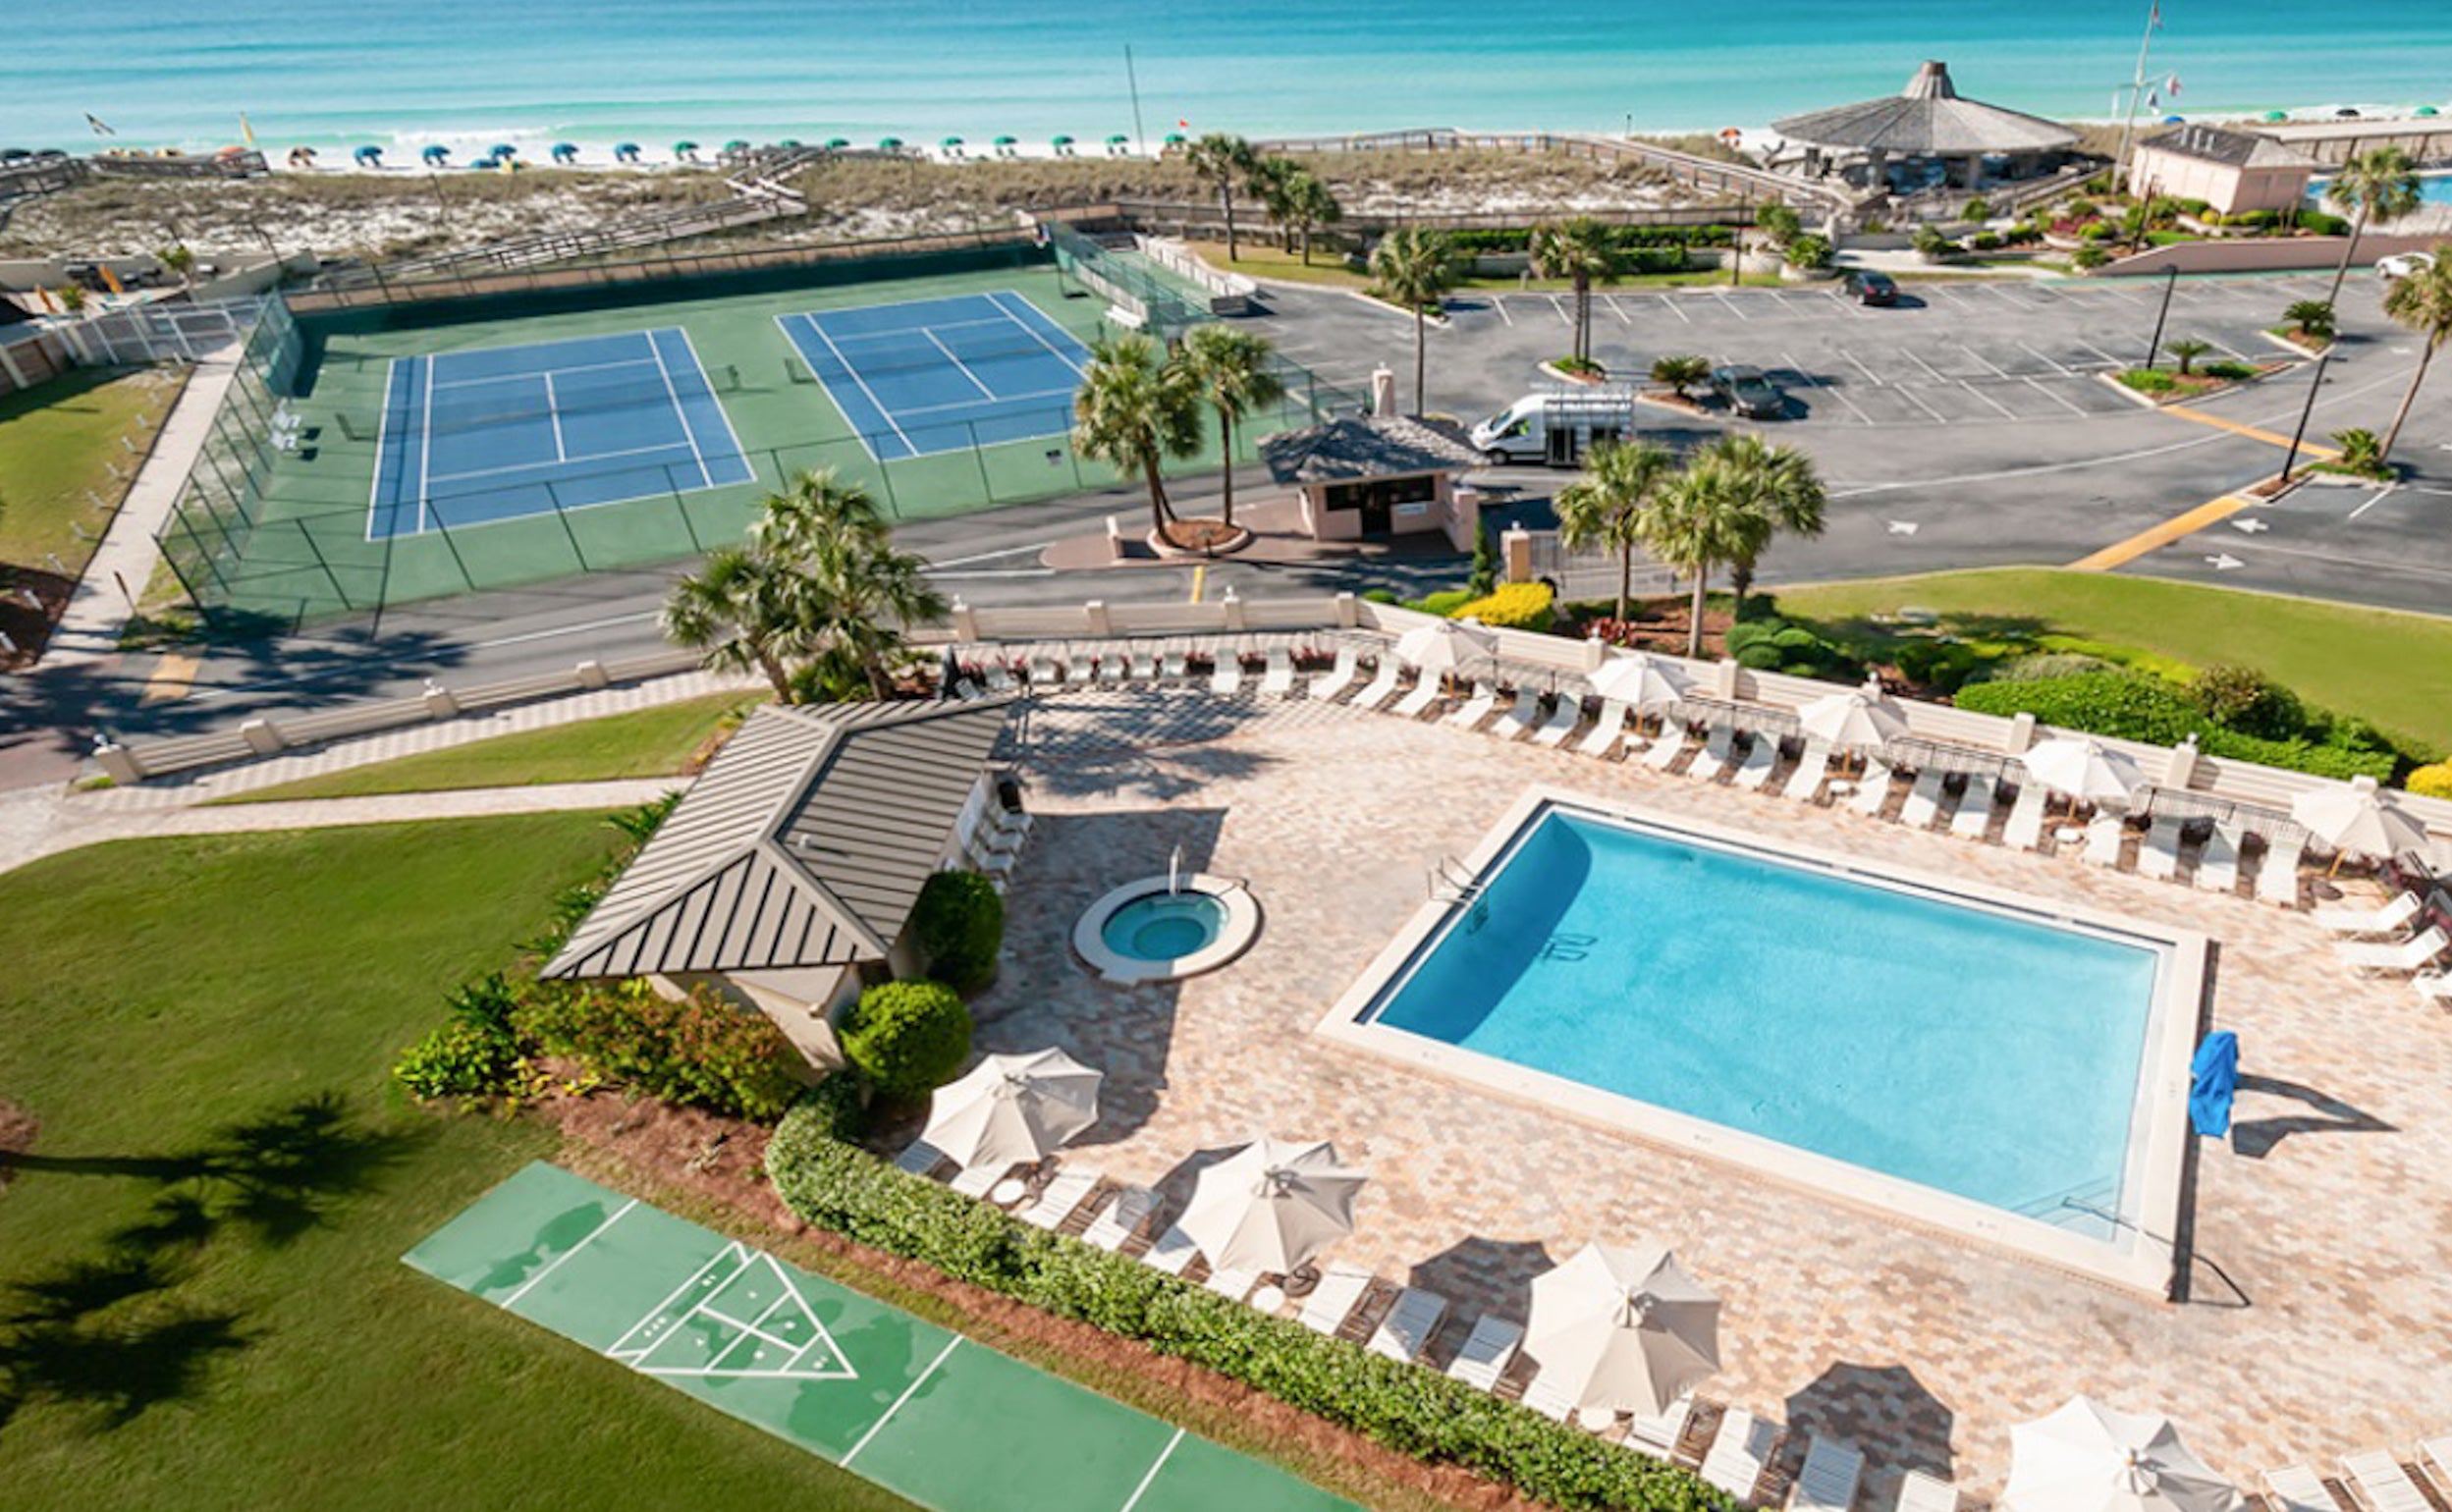 Pool%2C+Hot+tub%2C+Shuffleboard+and+Tennis+Courts